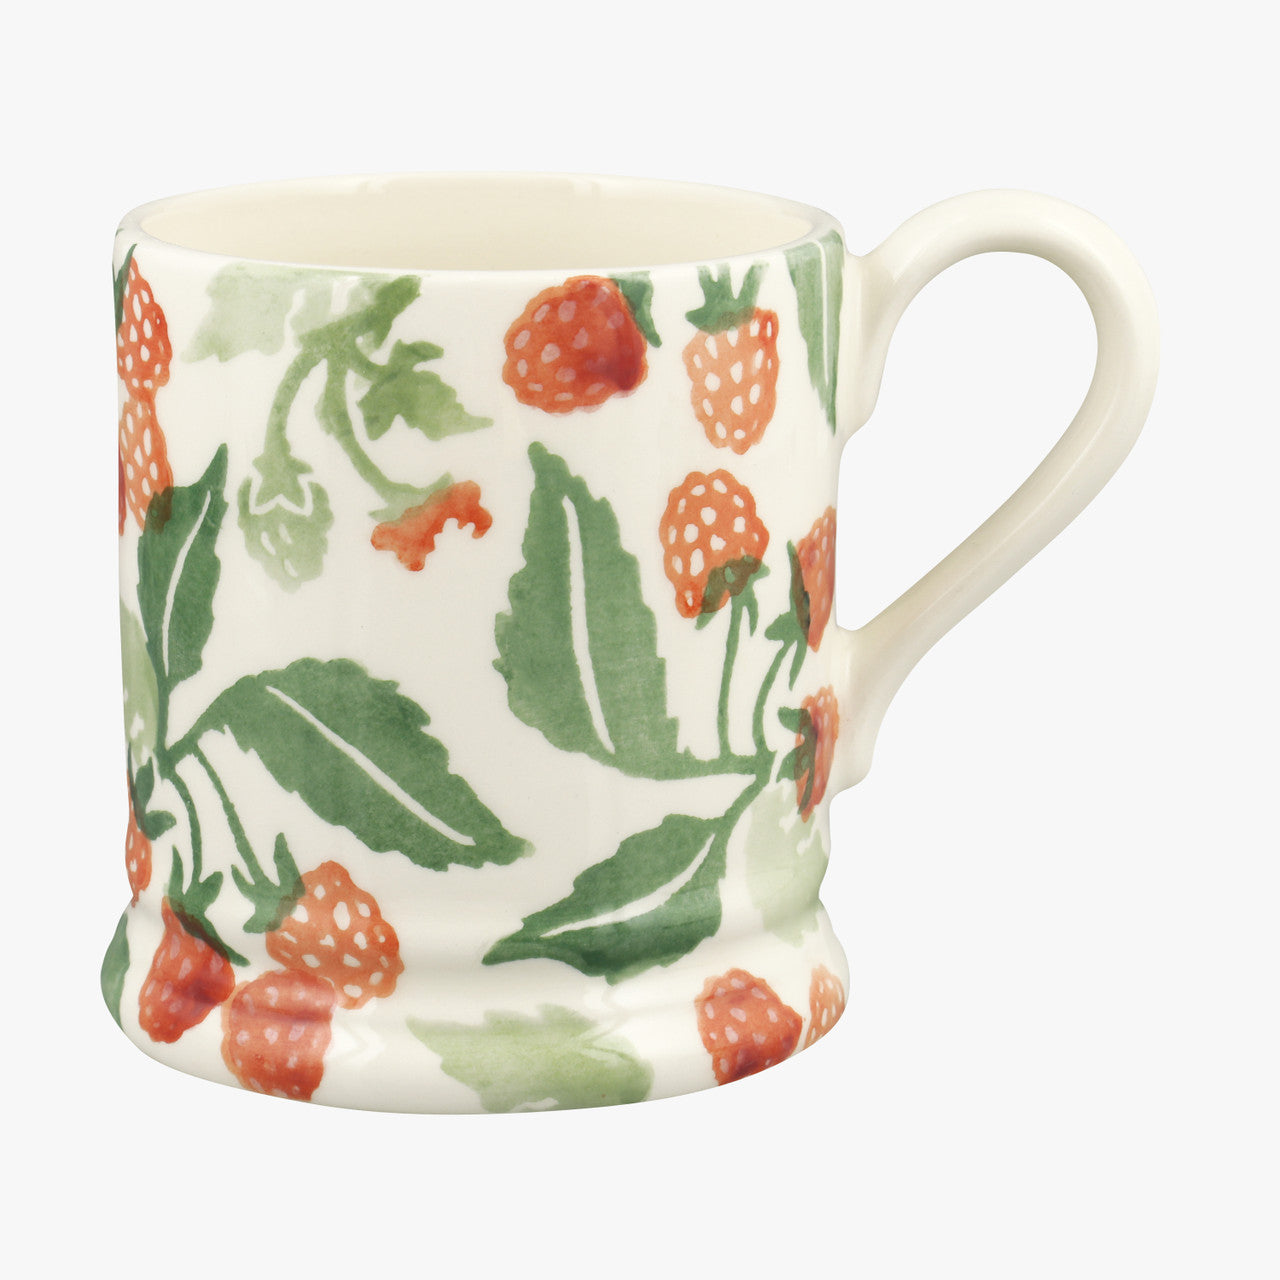 Raspberries 1/2 pint mug by Emma Bridgewater.